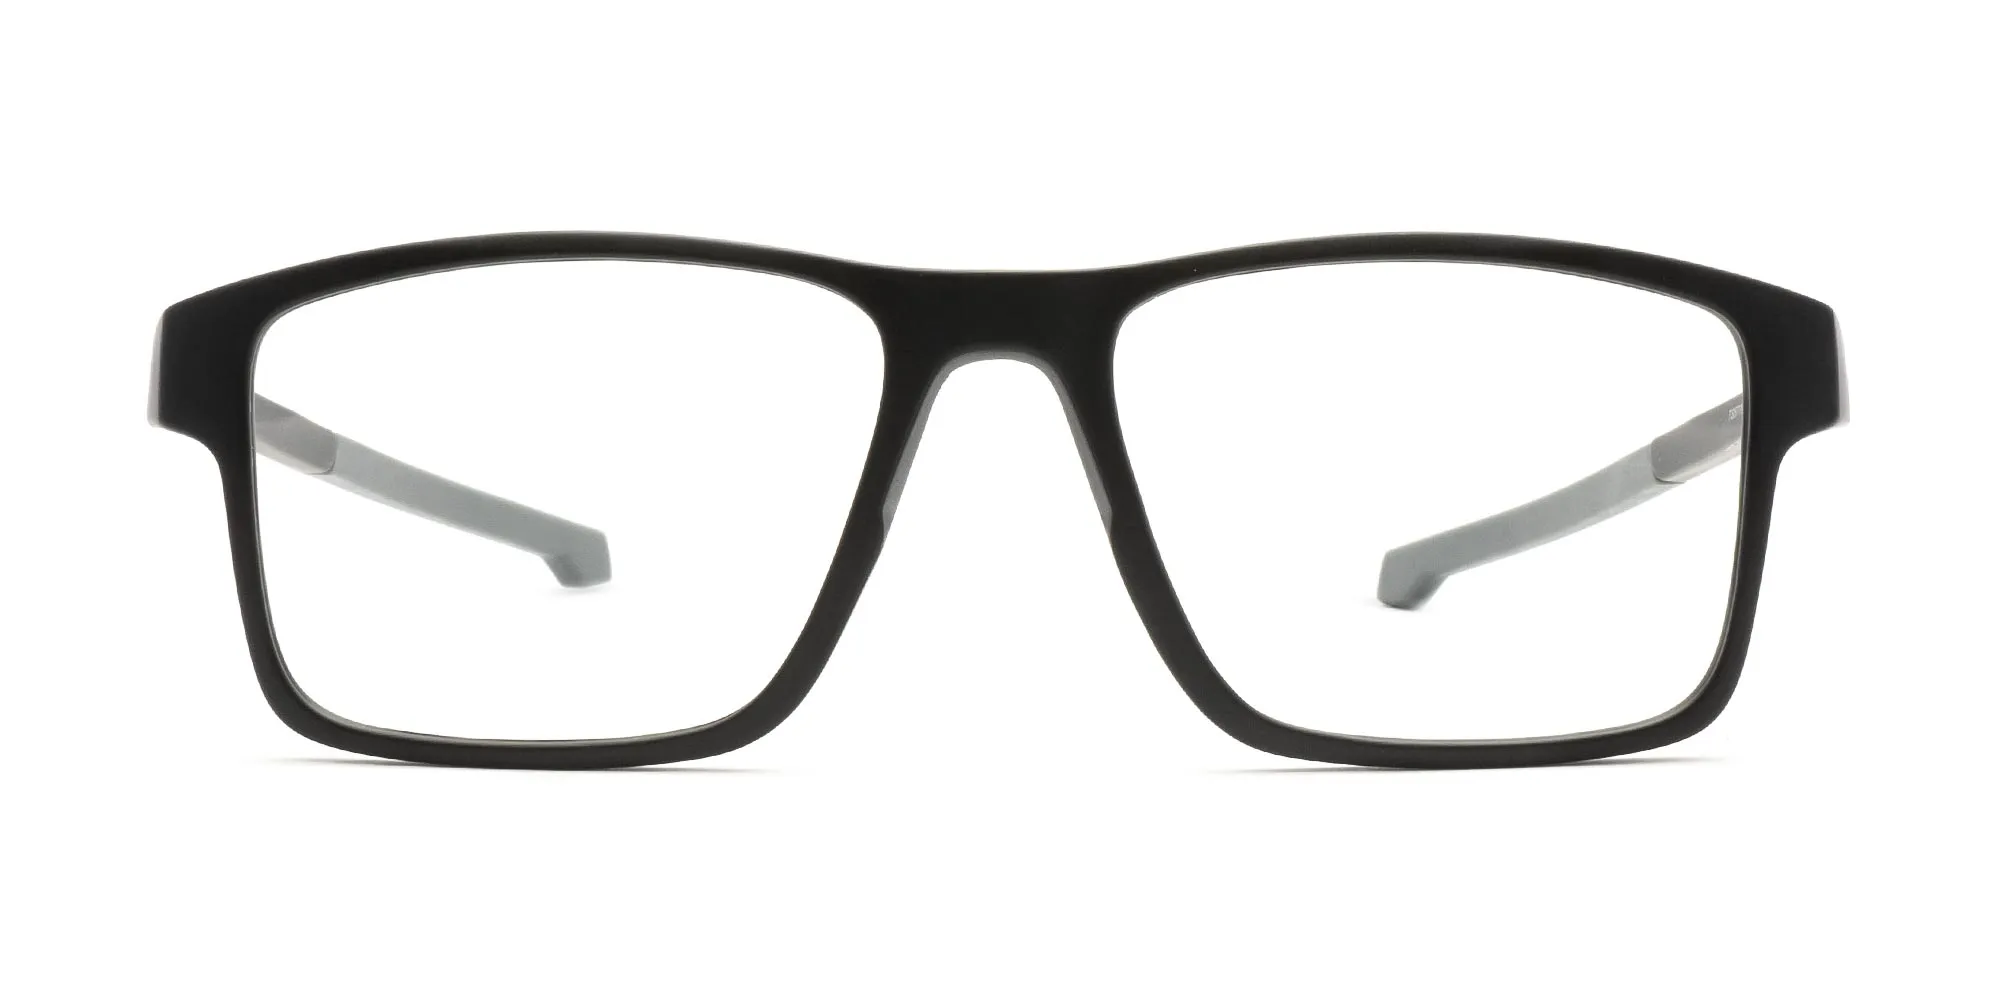 Sports Glasses With Prescription Lenses-2